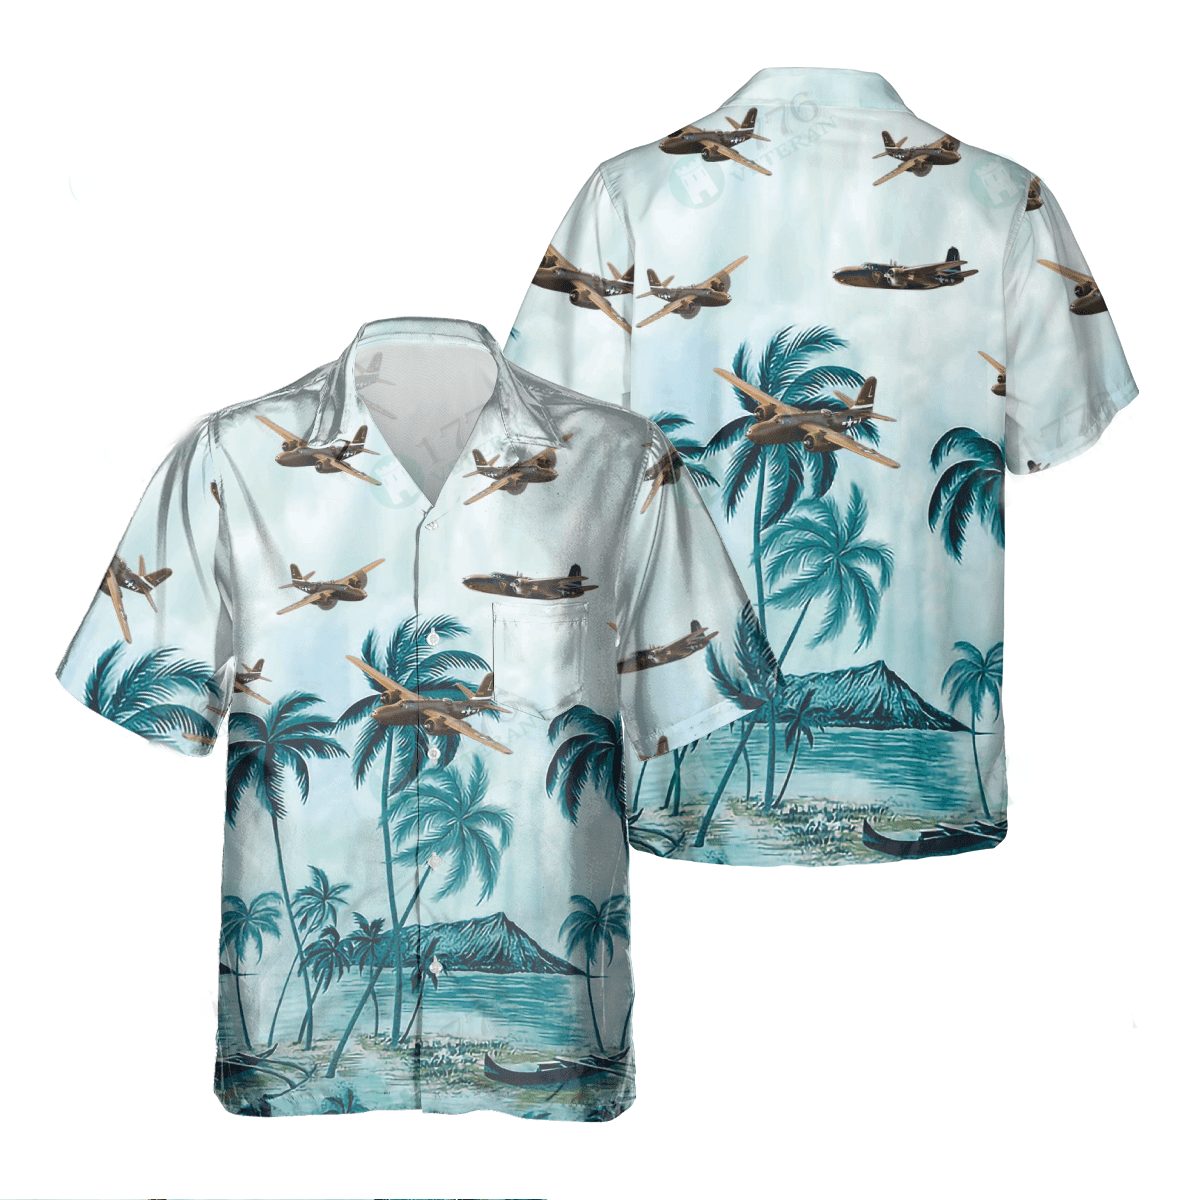 A-20 Havoc Pocket Hawaiian Shirt/ Hawaiian Shirt for Men Dad Veteran/ Patriot Day